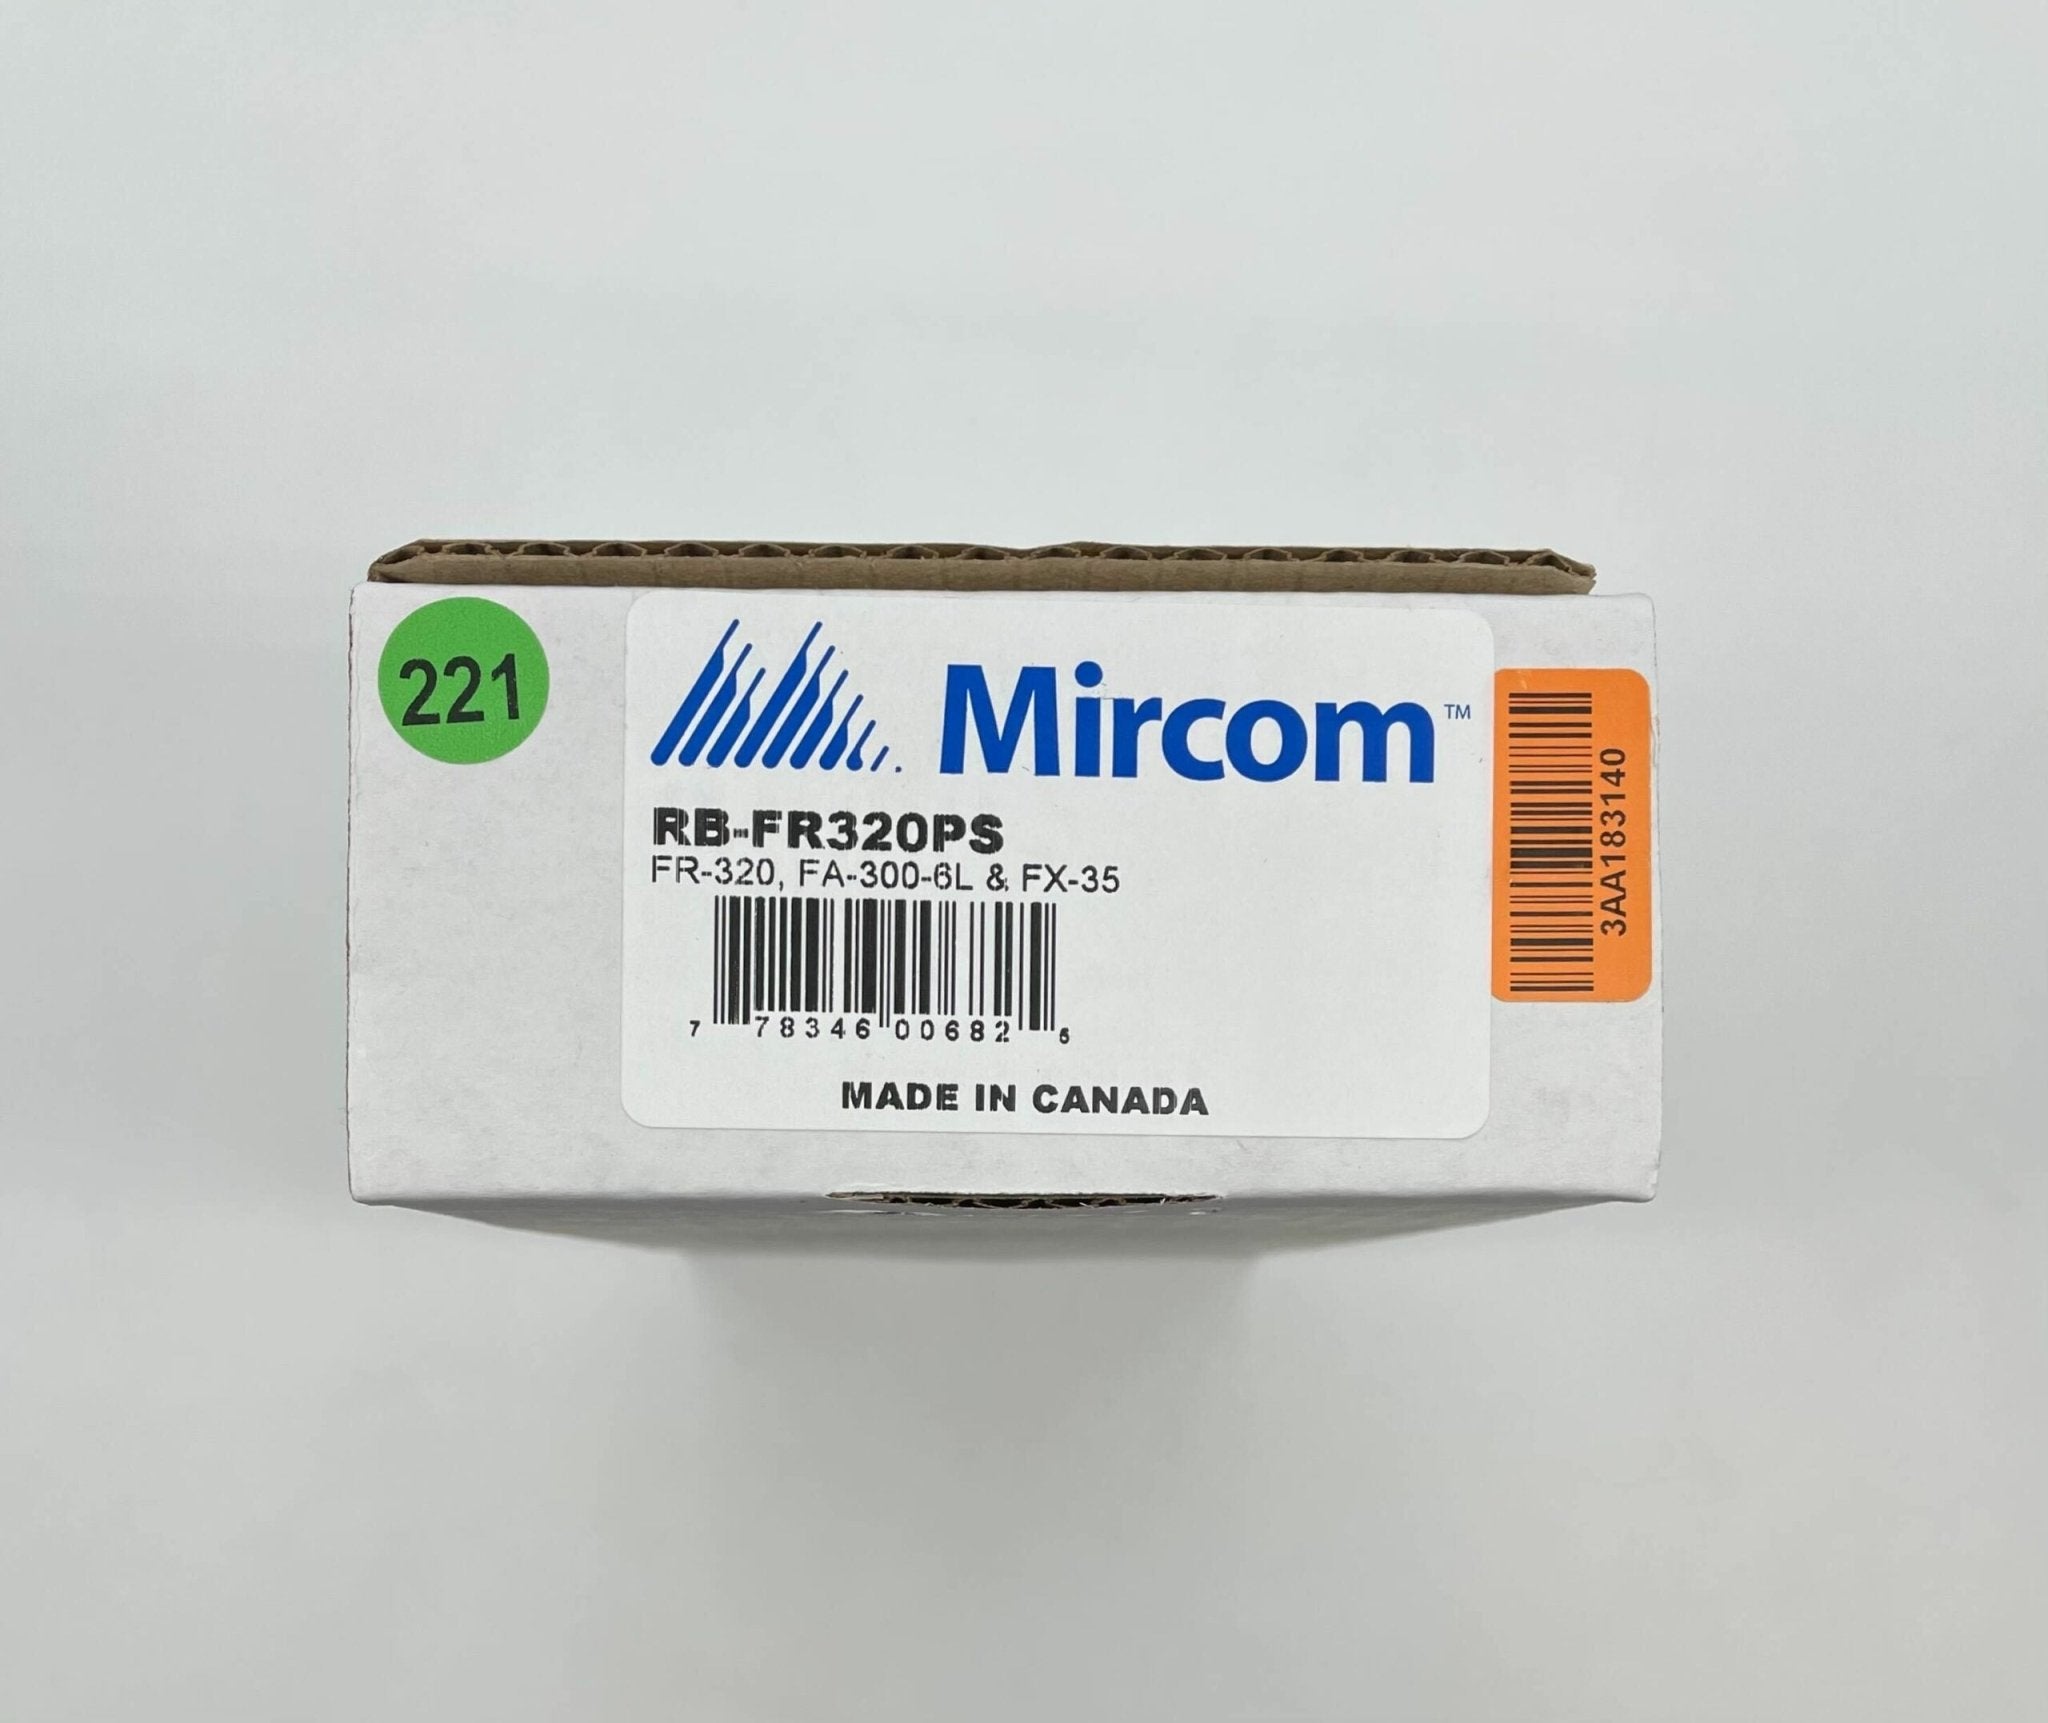 Mircom RB-FR320PS - The Fire Alarm Supplier